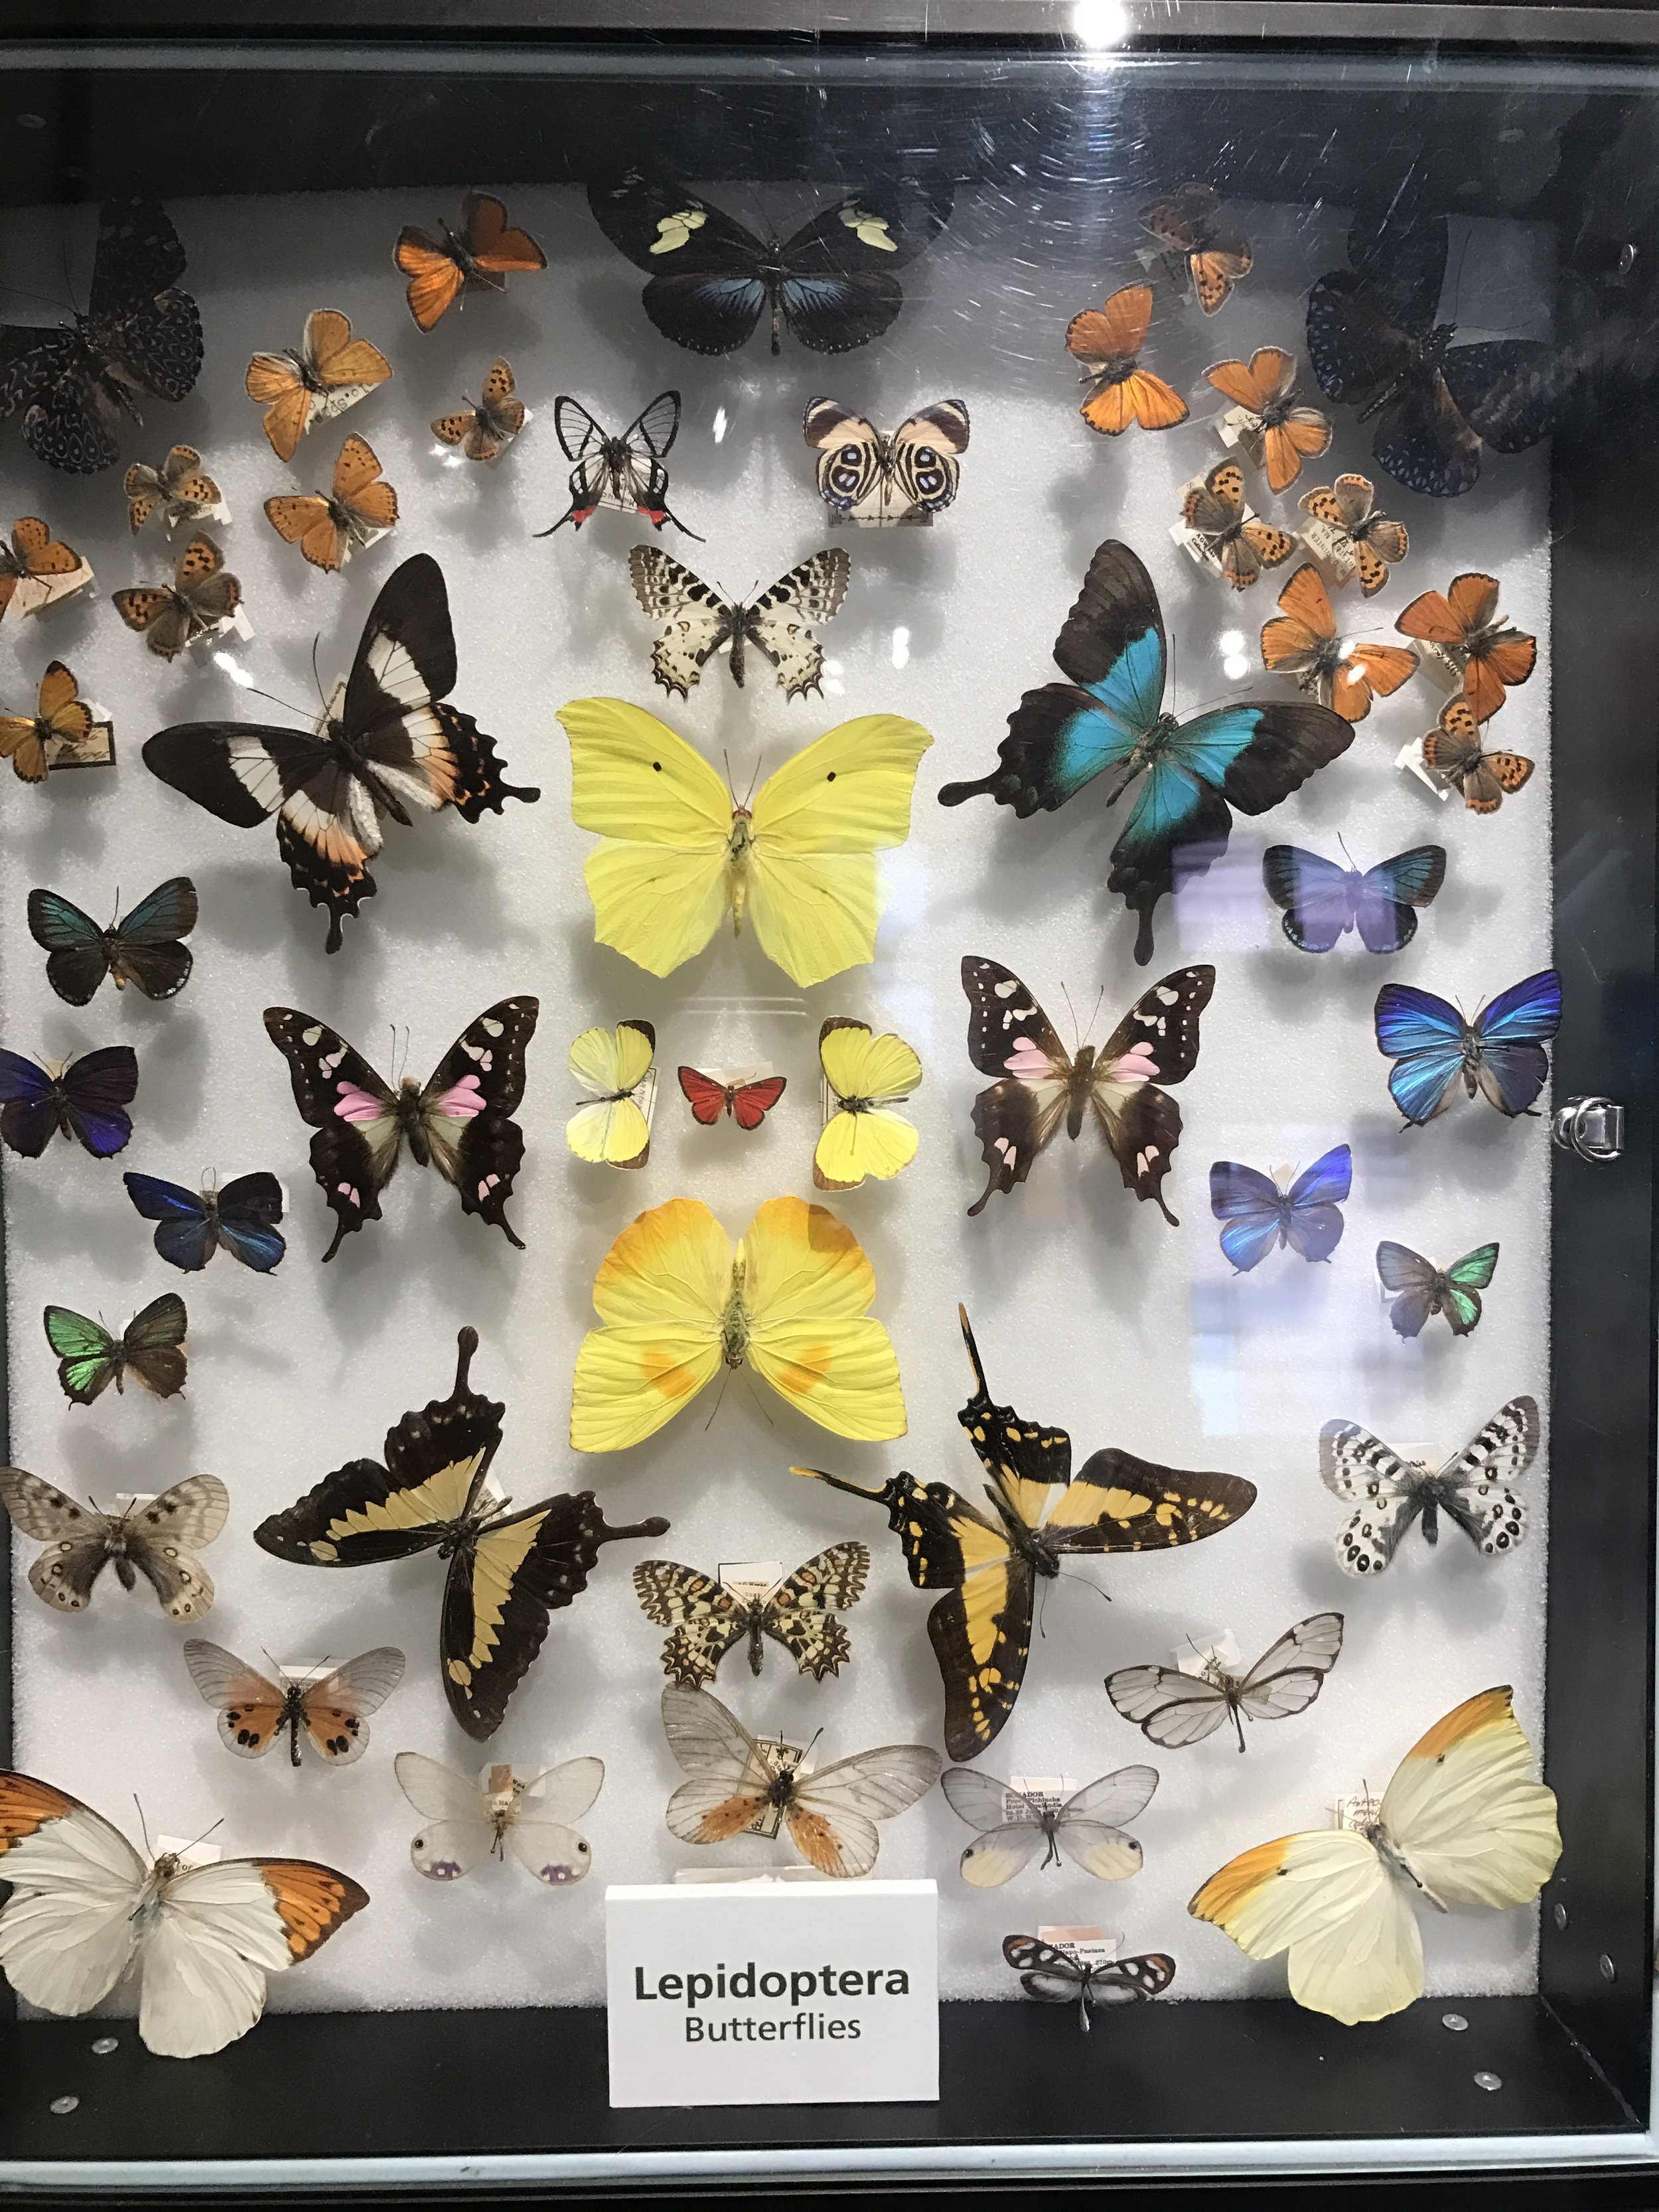 Beautifully displayed butterflies